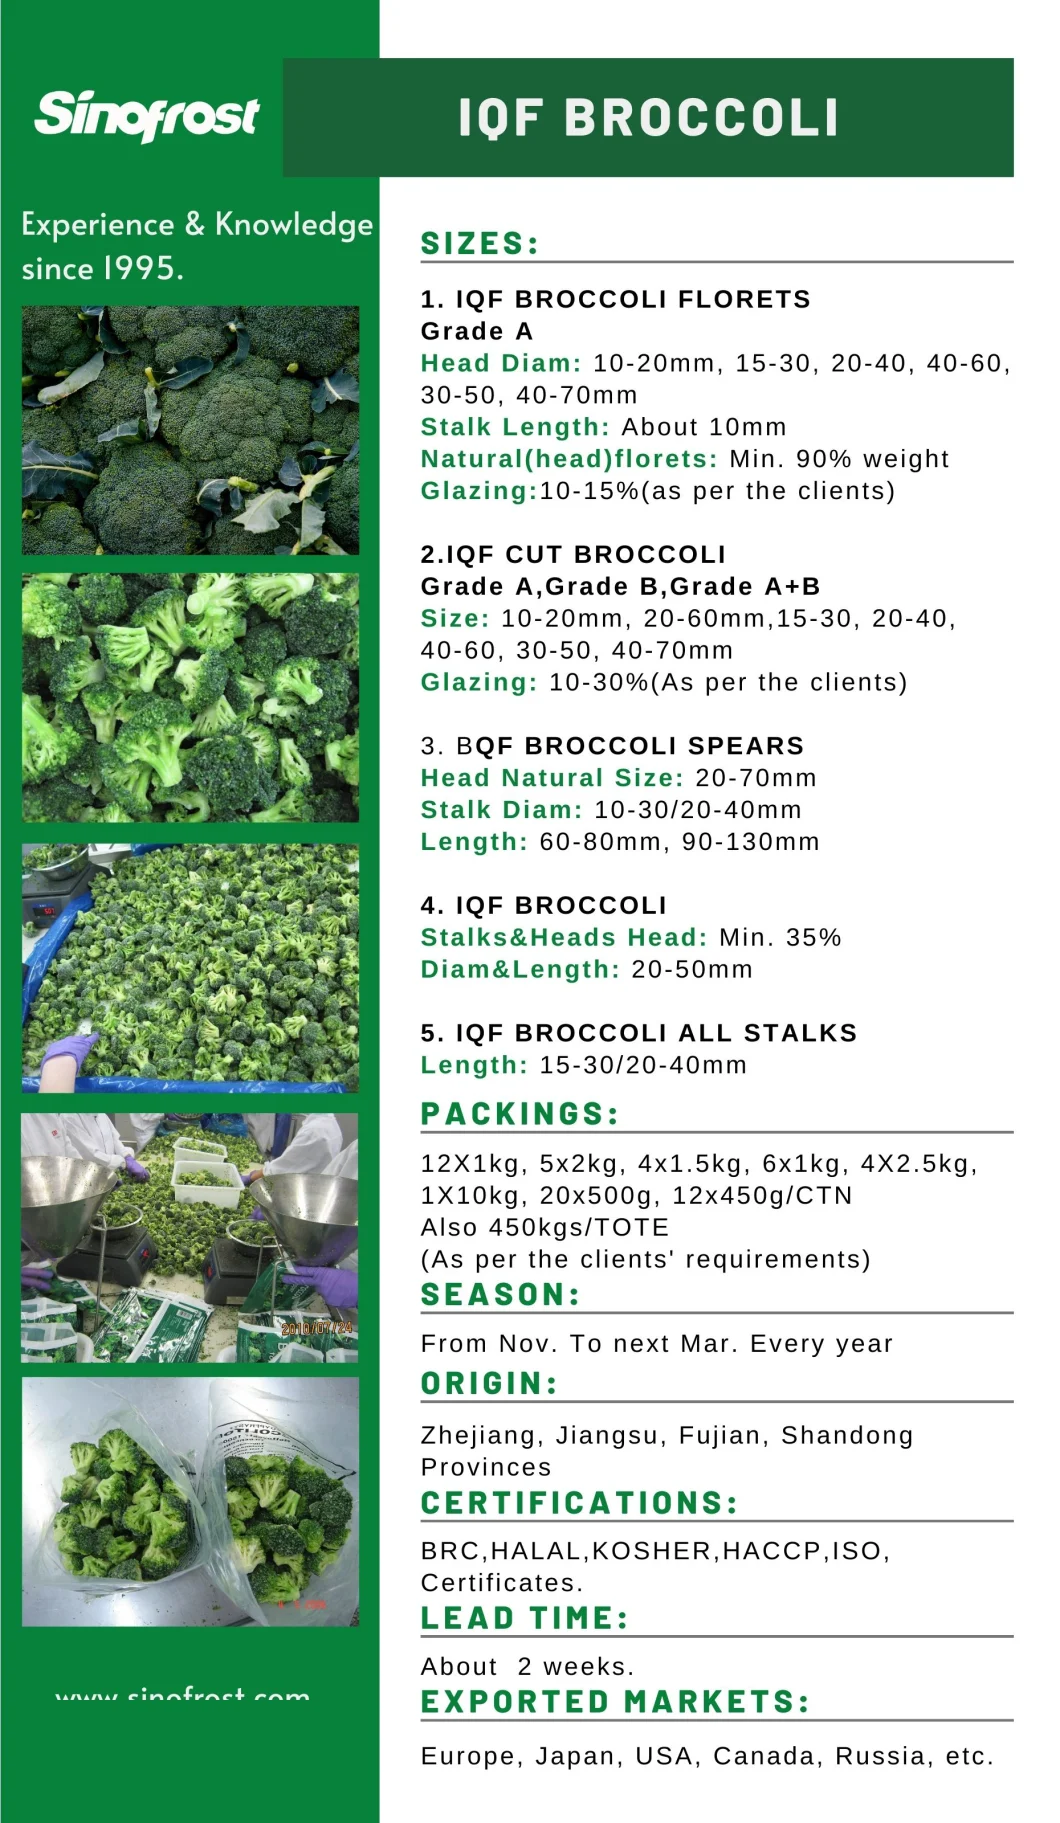 IQF Broccoli Cuts, Frozen Broccoli Cuts, Low Prices, Grade B, IQF Broccoli Stalks & Cuts, Bqf Broccoli Spears, IQF Broccoli, IQF Broccoli, Frozen Broccoli